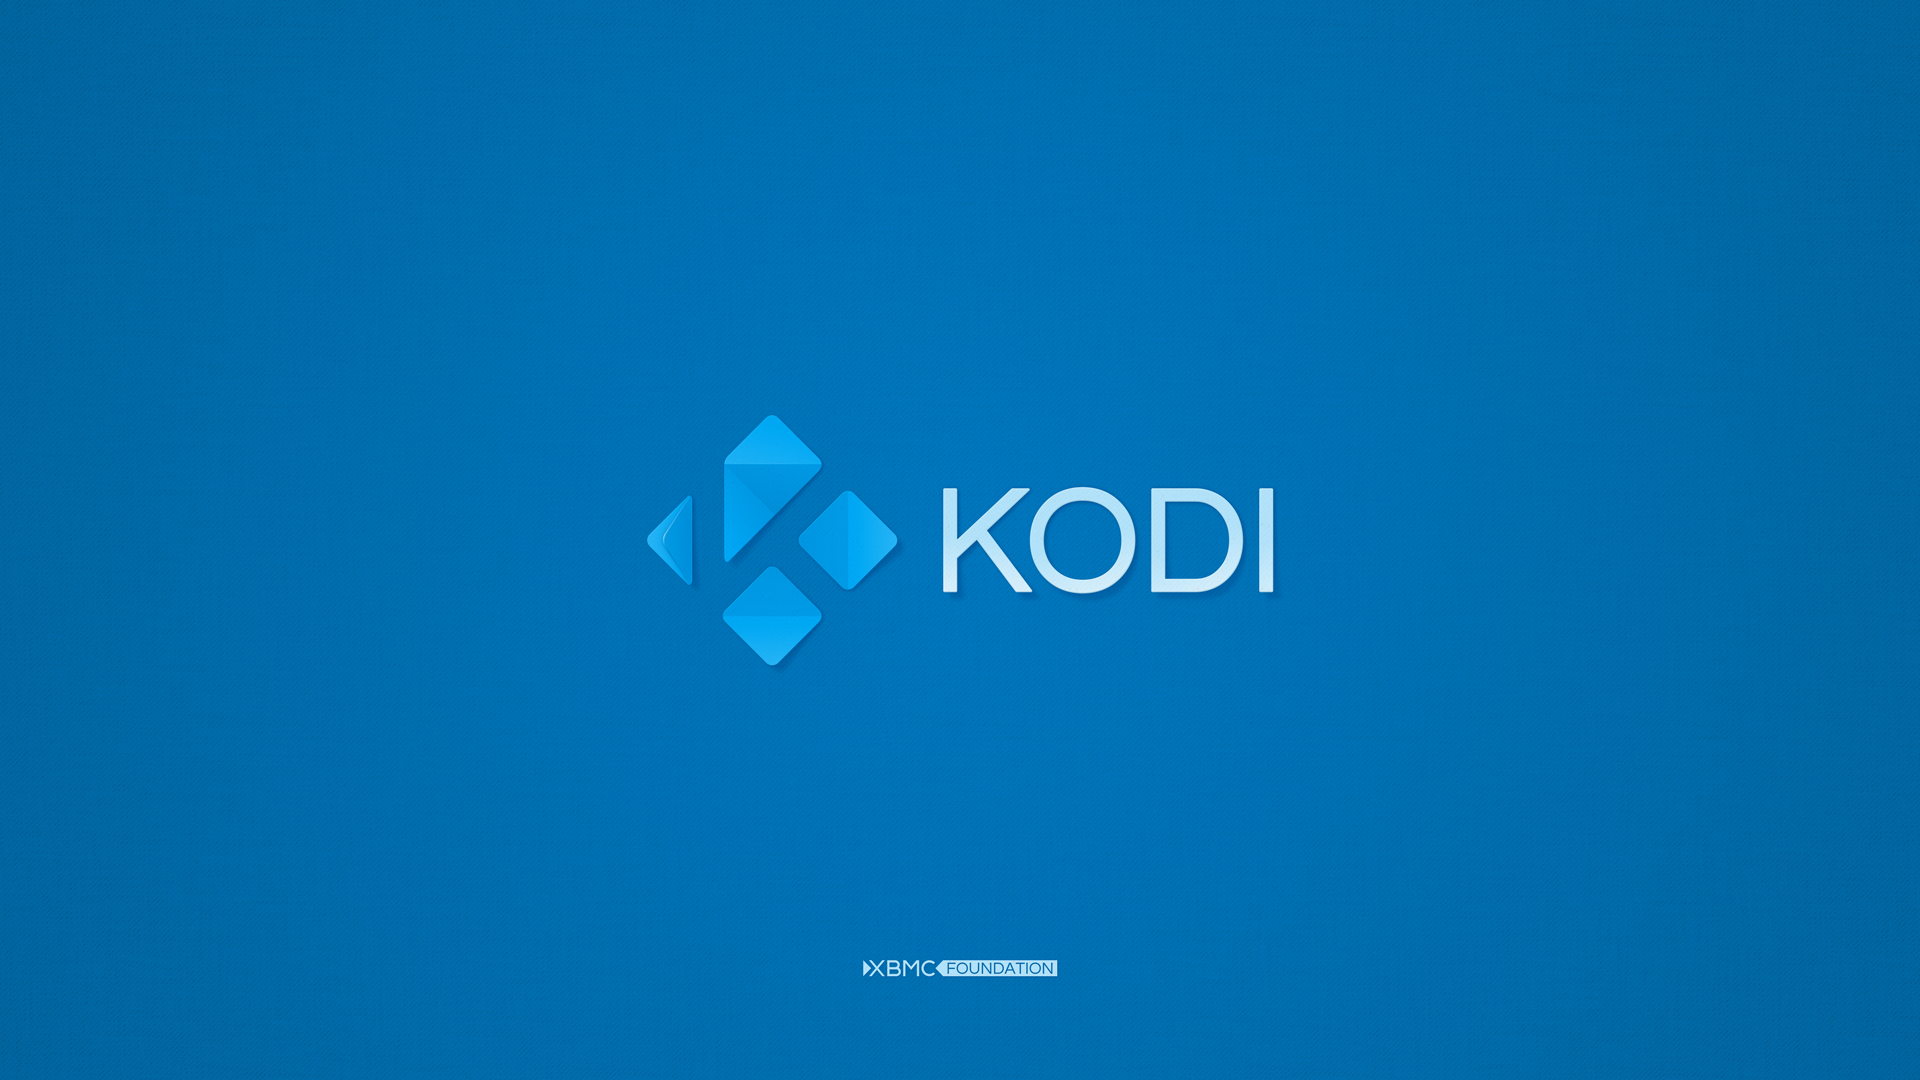 Kodi-Wallpaper-17D-1080p samfisher.jpg